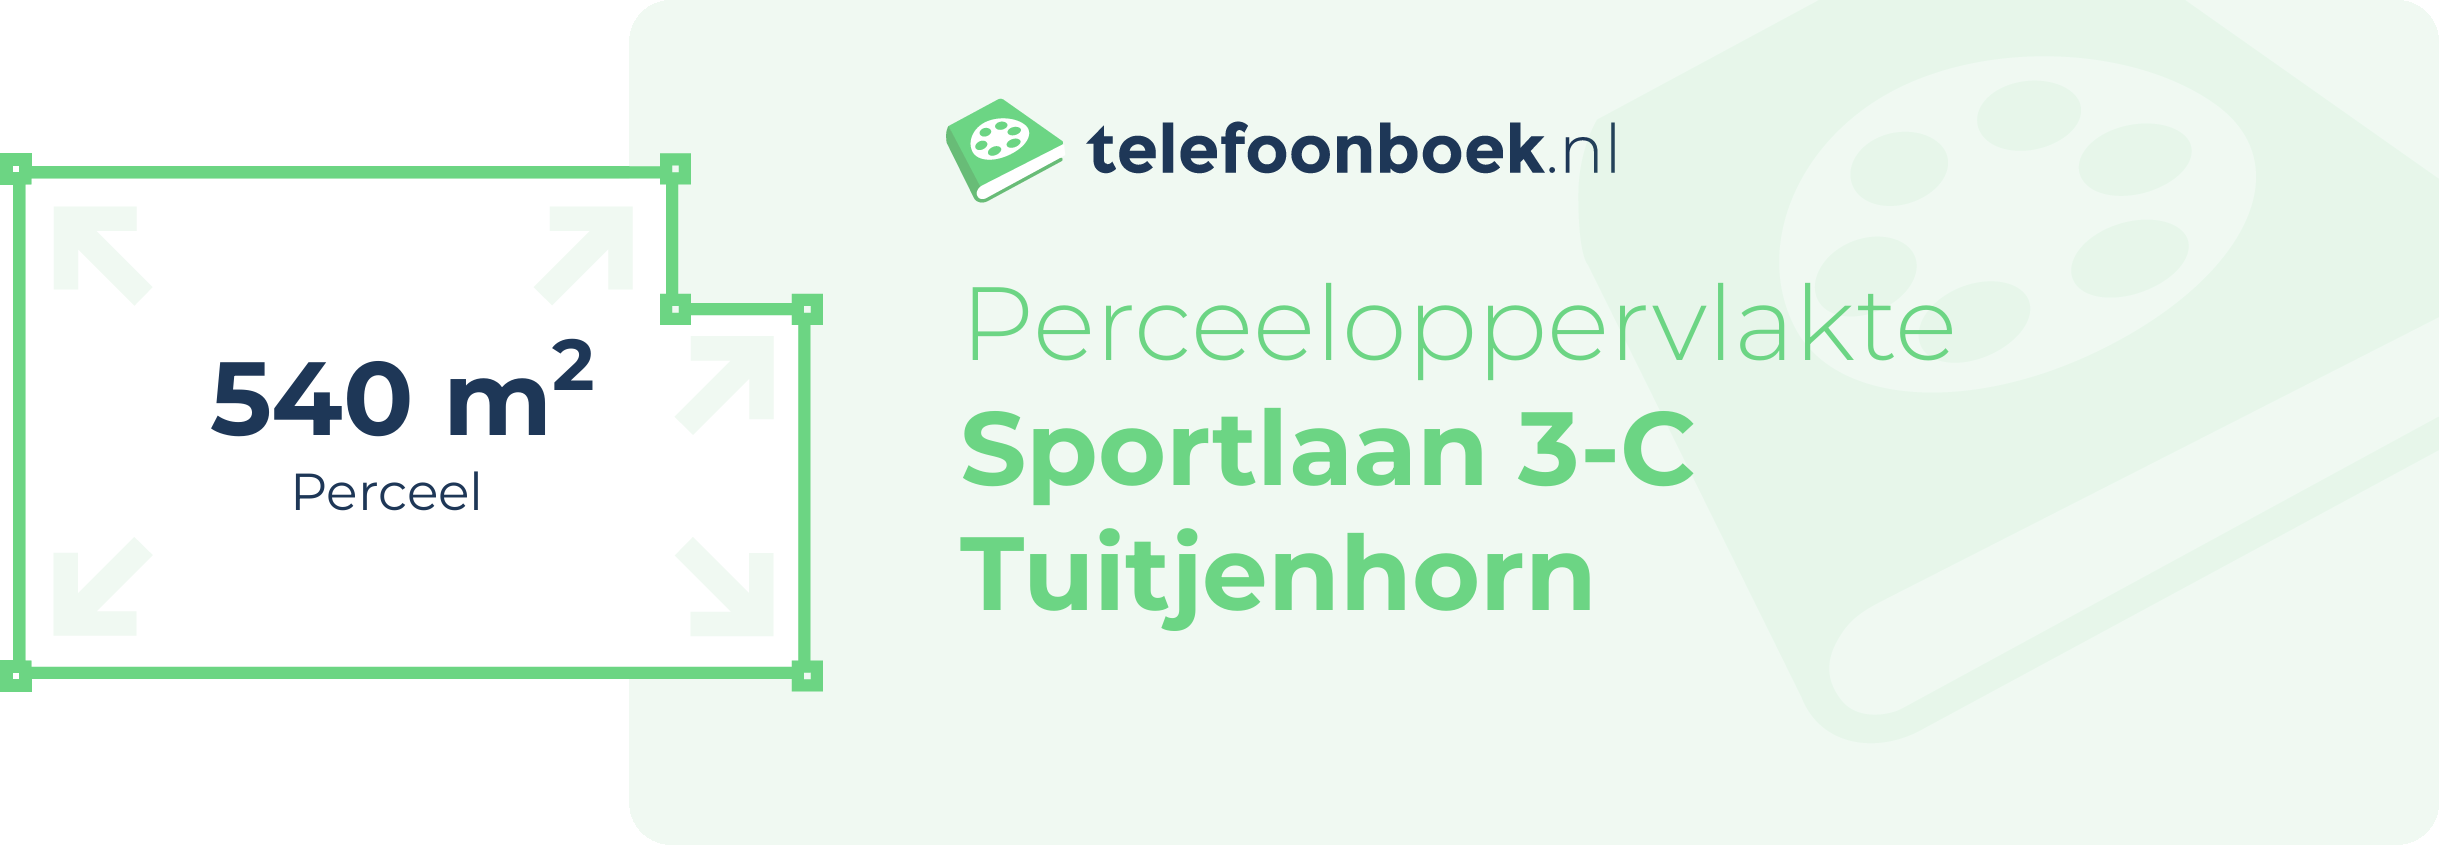 Perceeloppervlakte Sportlaan 3-C Tuitjenhorn